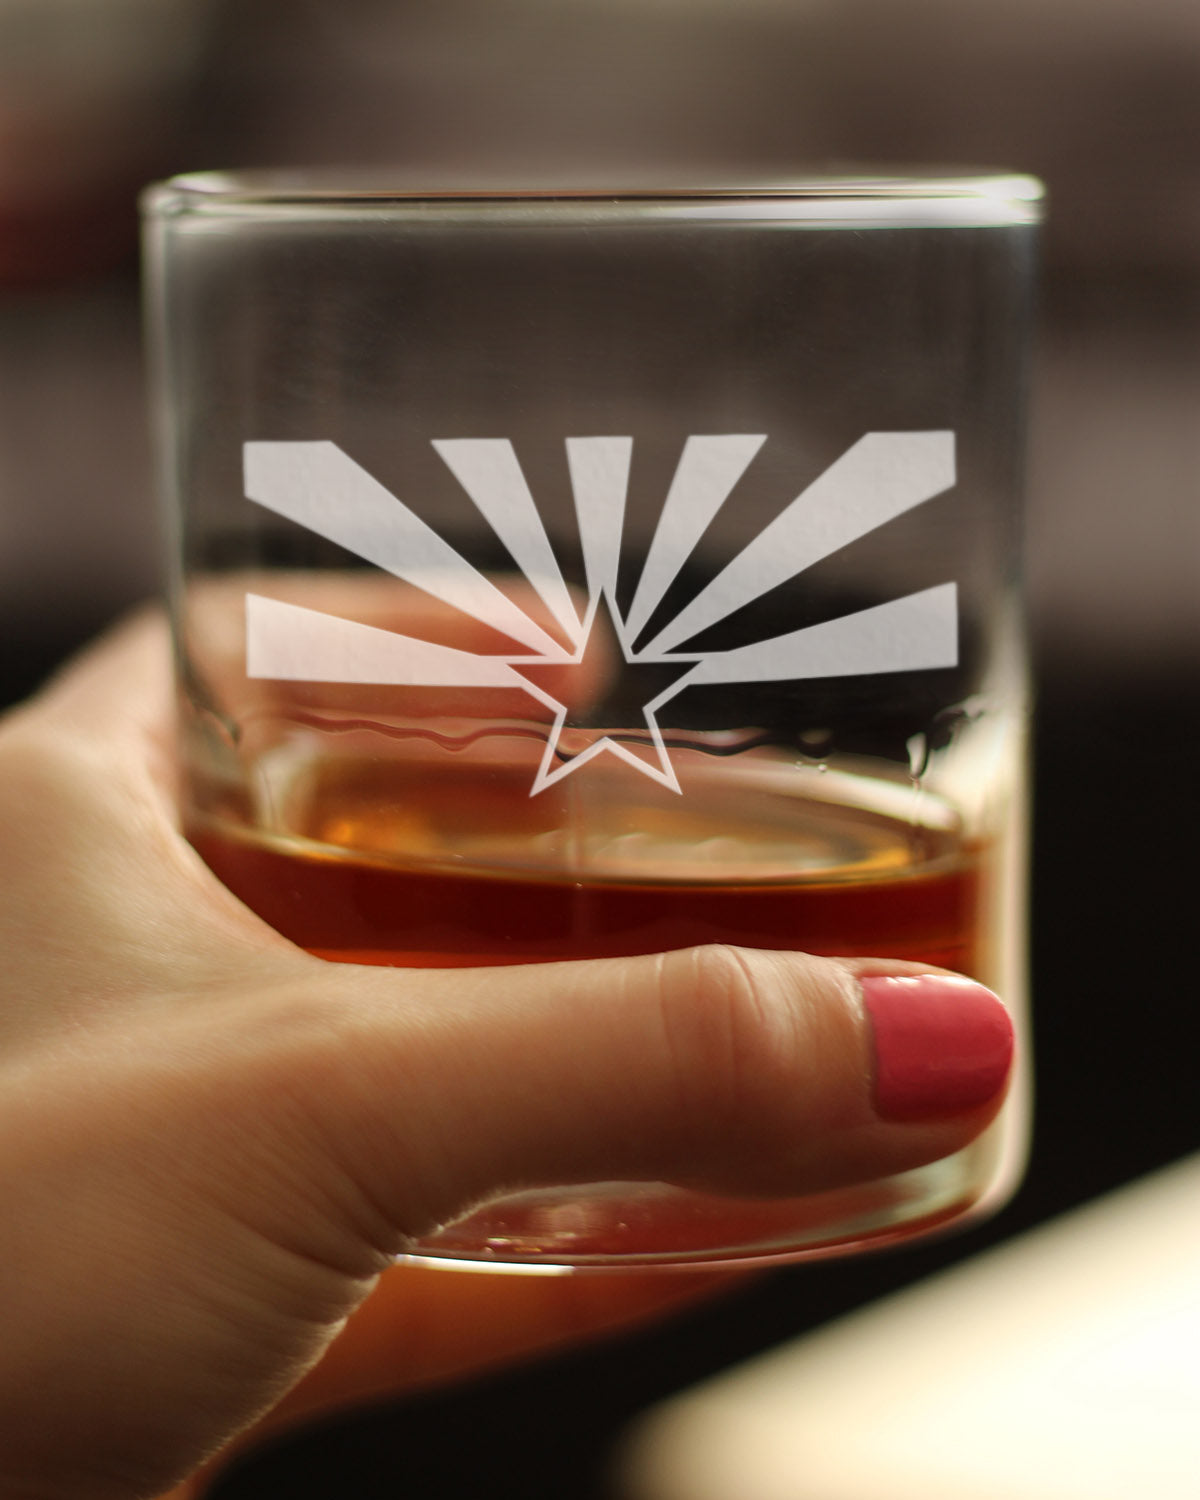 Arizona Flag Whiskey Rocks Glass - State Themed Drinking Decor and Gifts for Arizonan Women &amp; Men - 10.25 Oz Whisky Tumbler Glasses